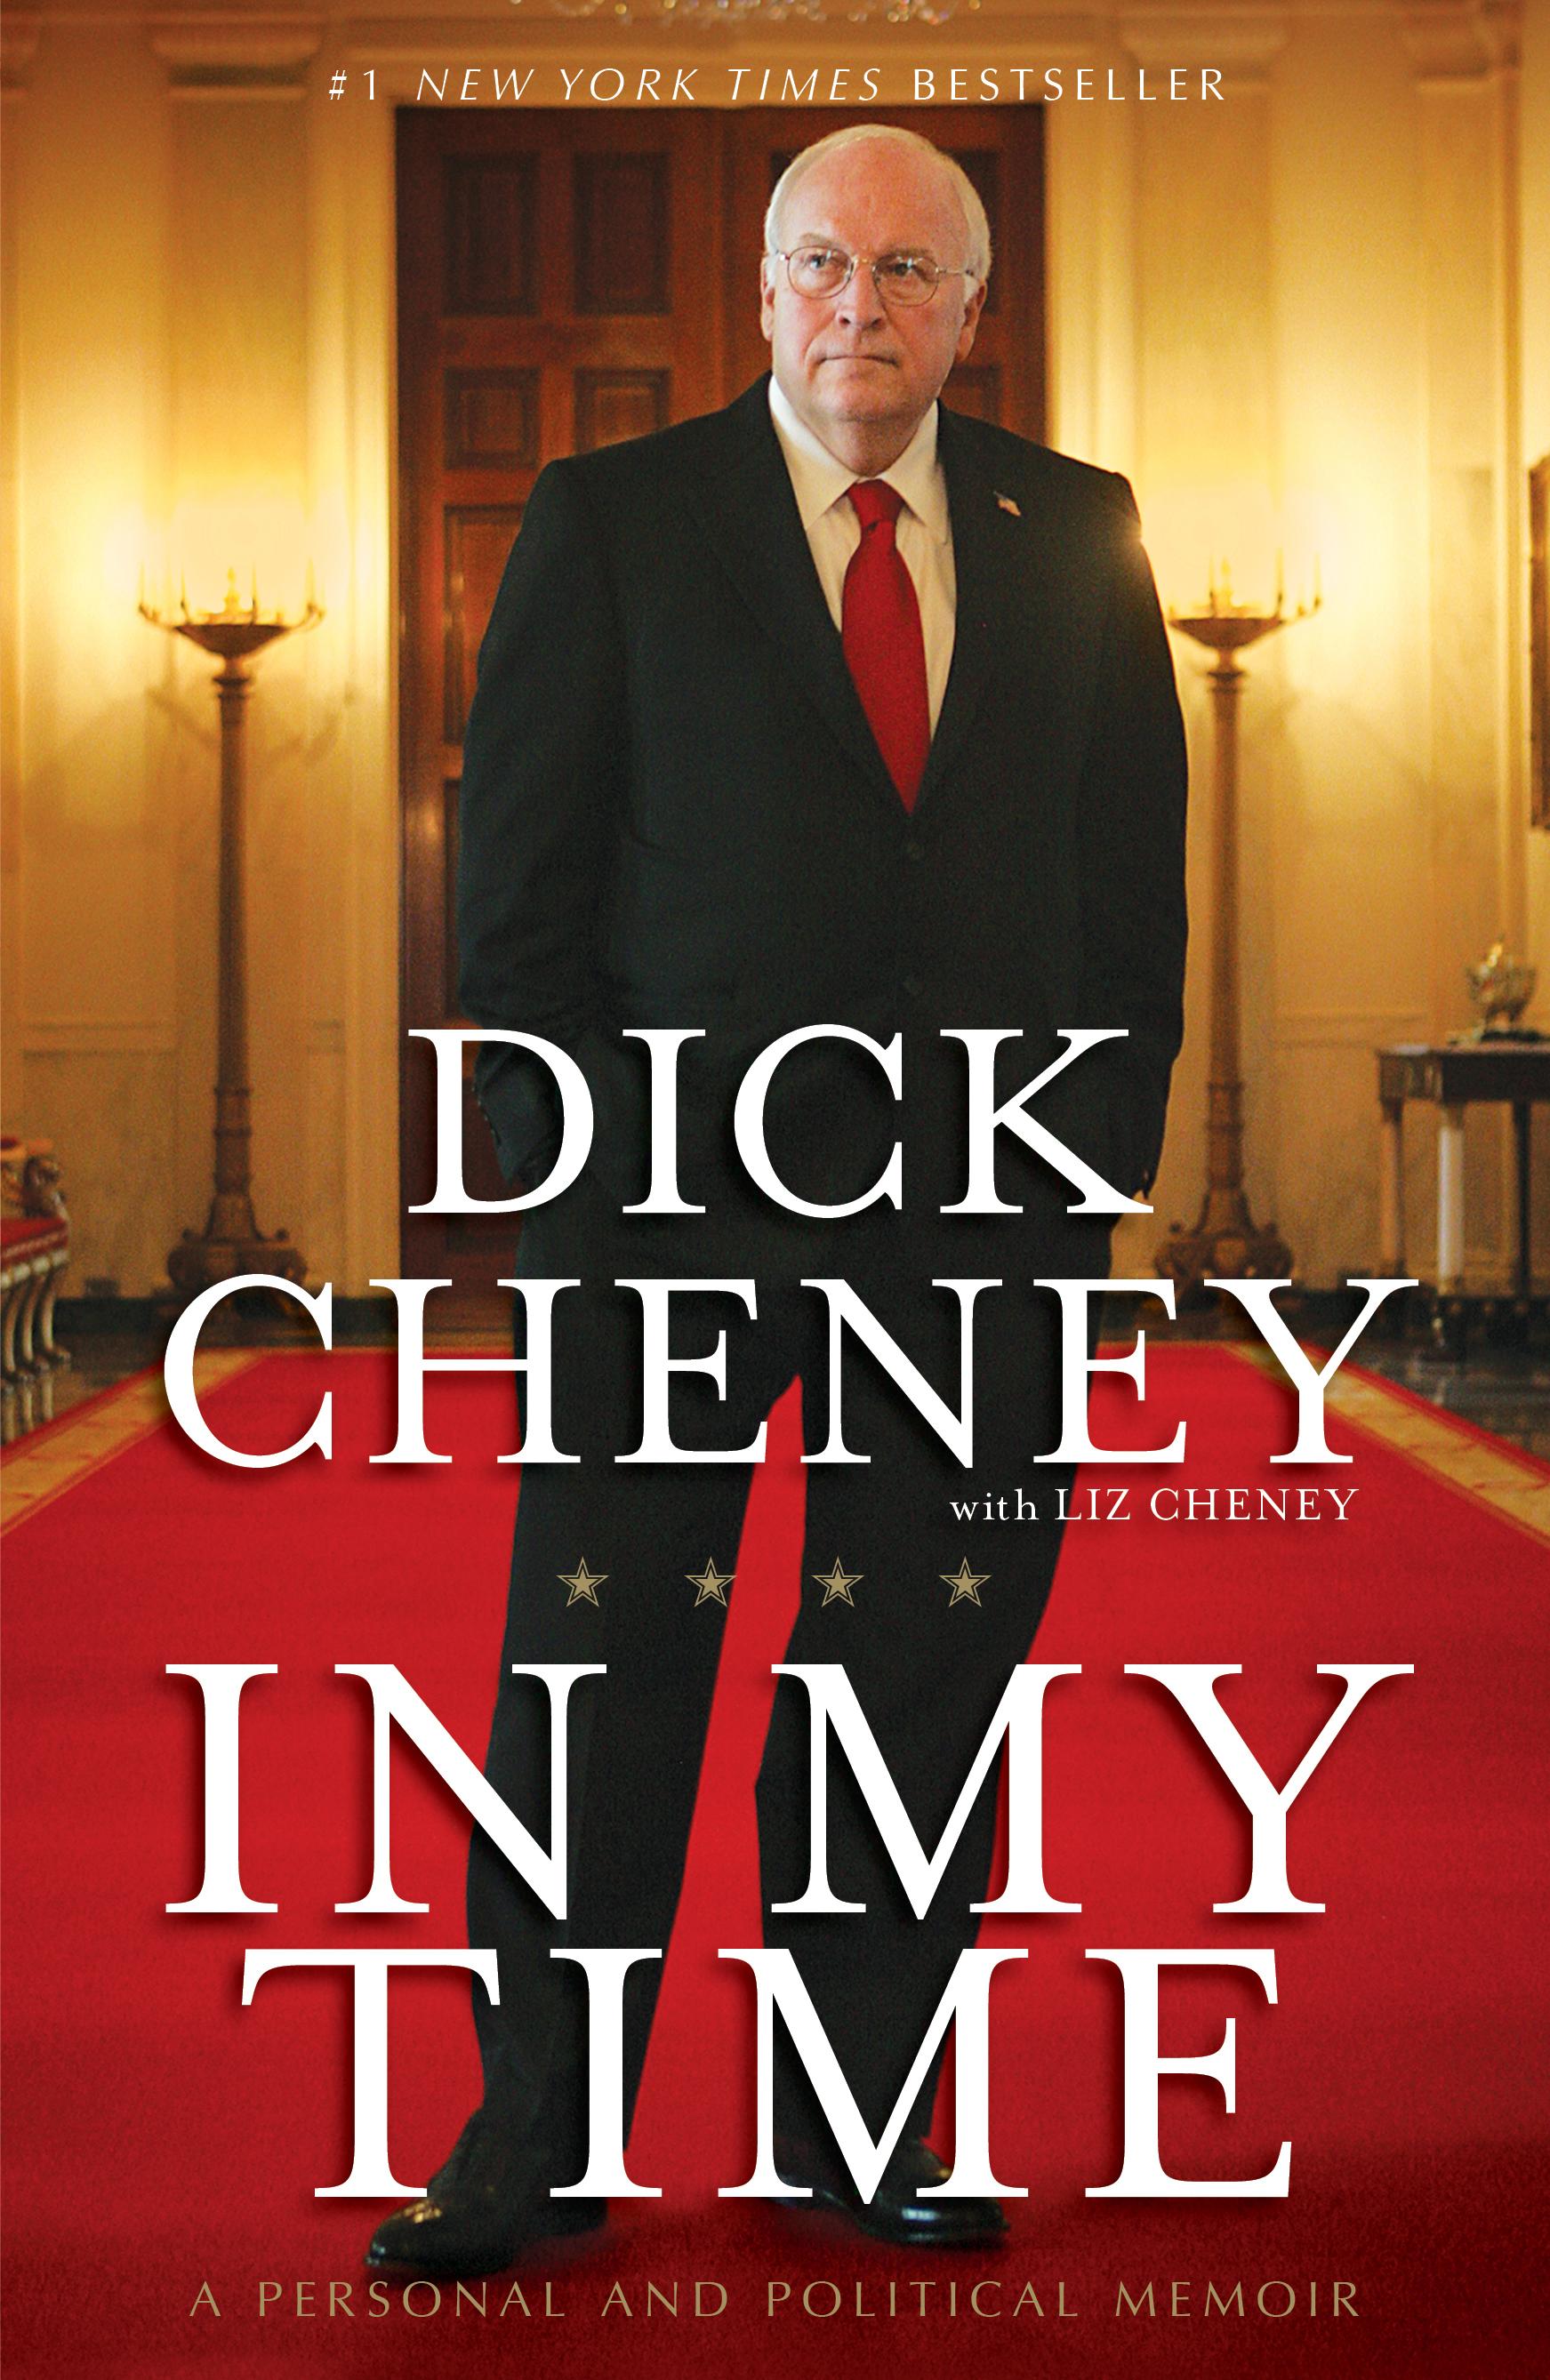 Cheney dick spokane